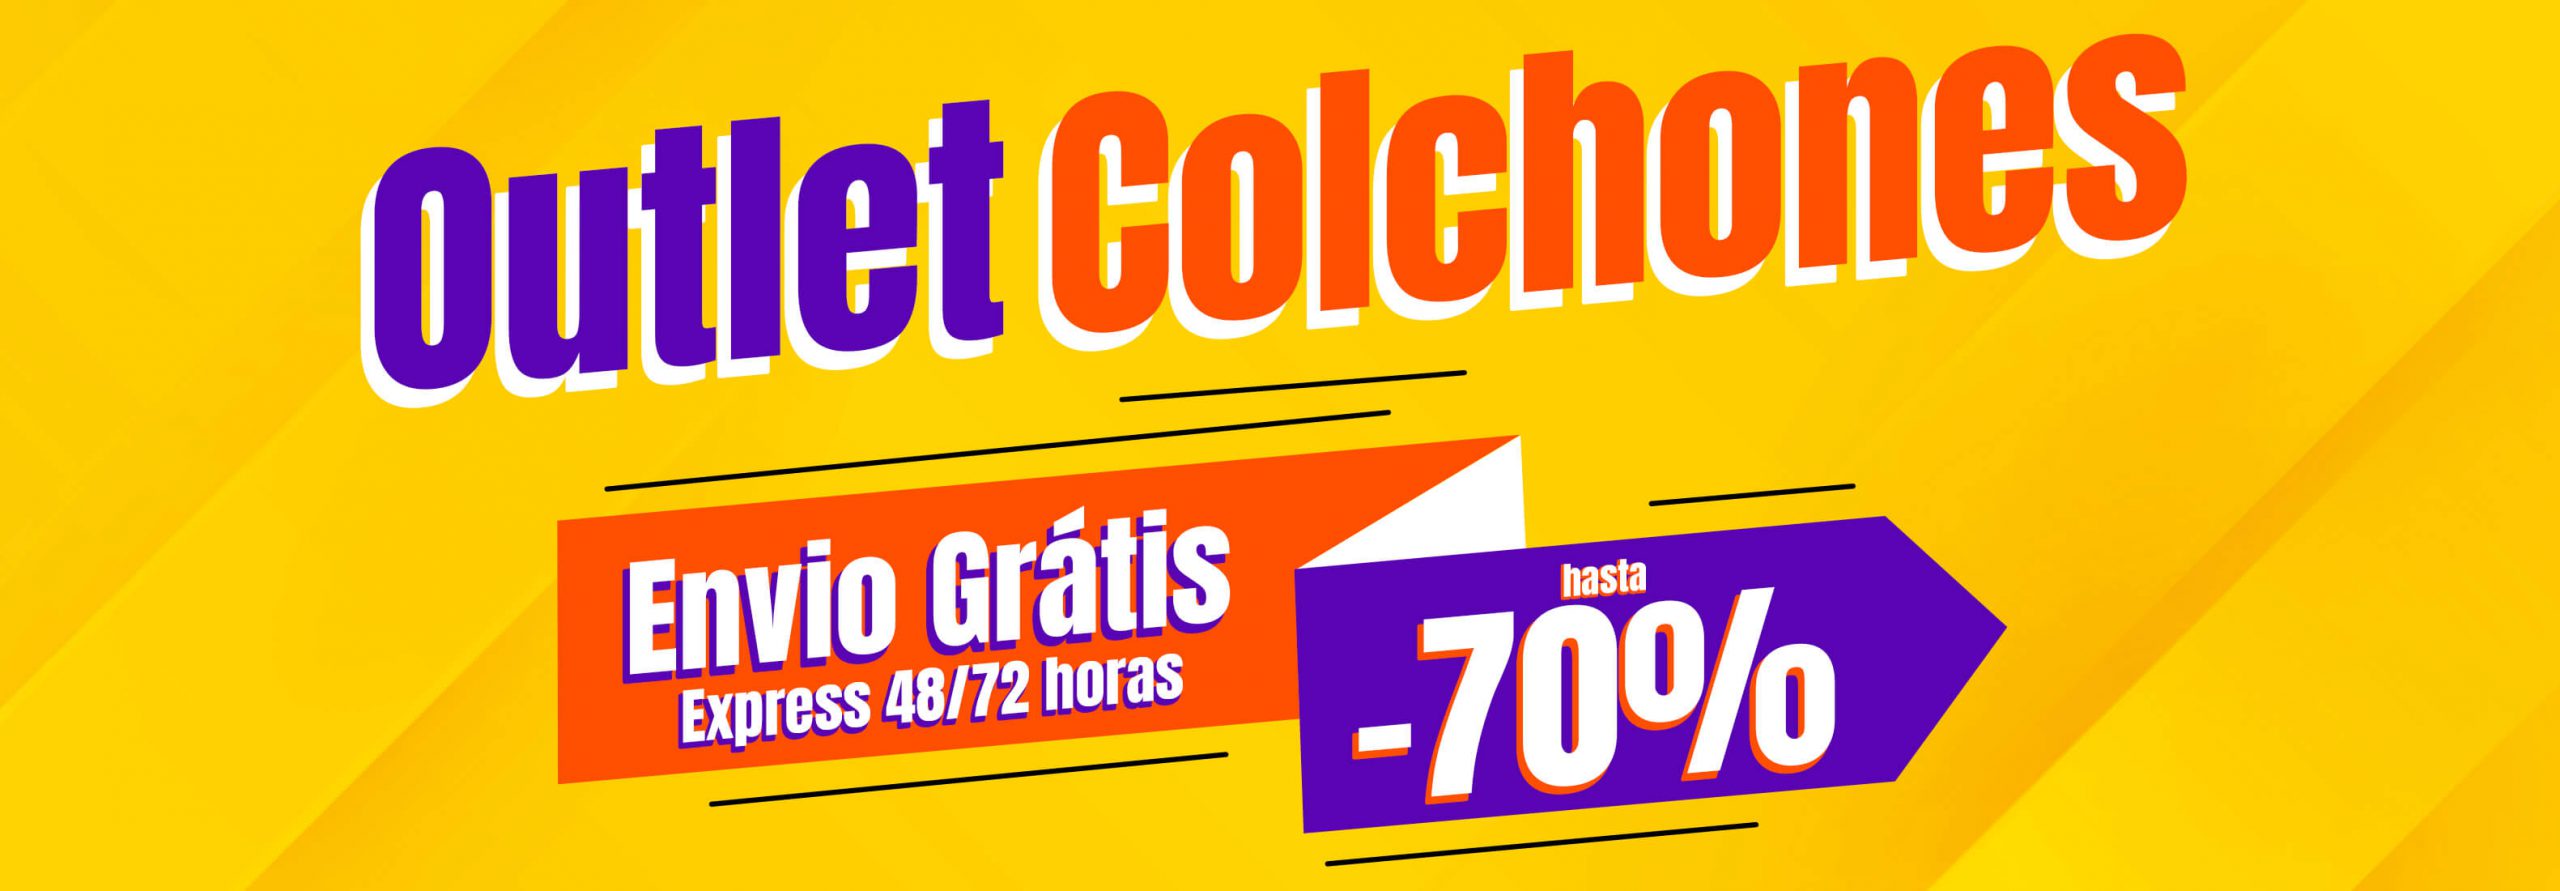 Outlet ColchonesExpress Cover Web | La Tienda 3Bs | La Tienda 3Bs